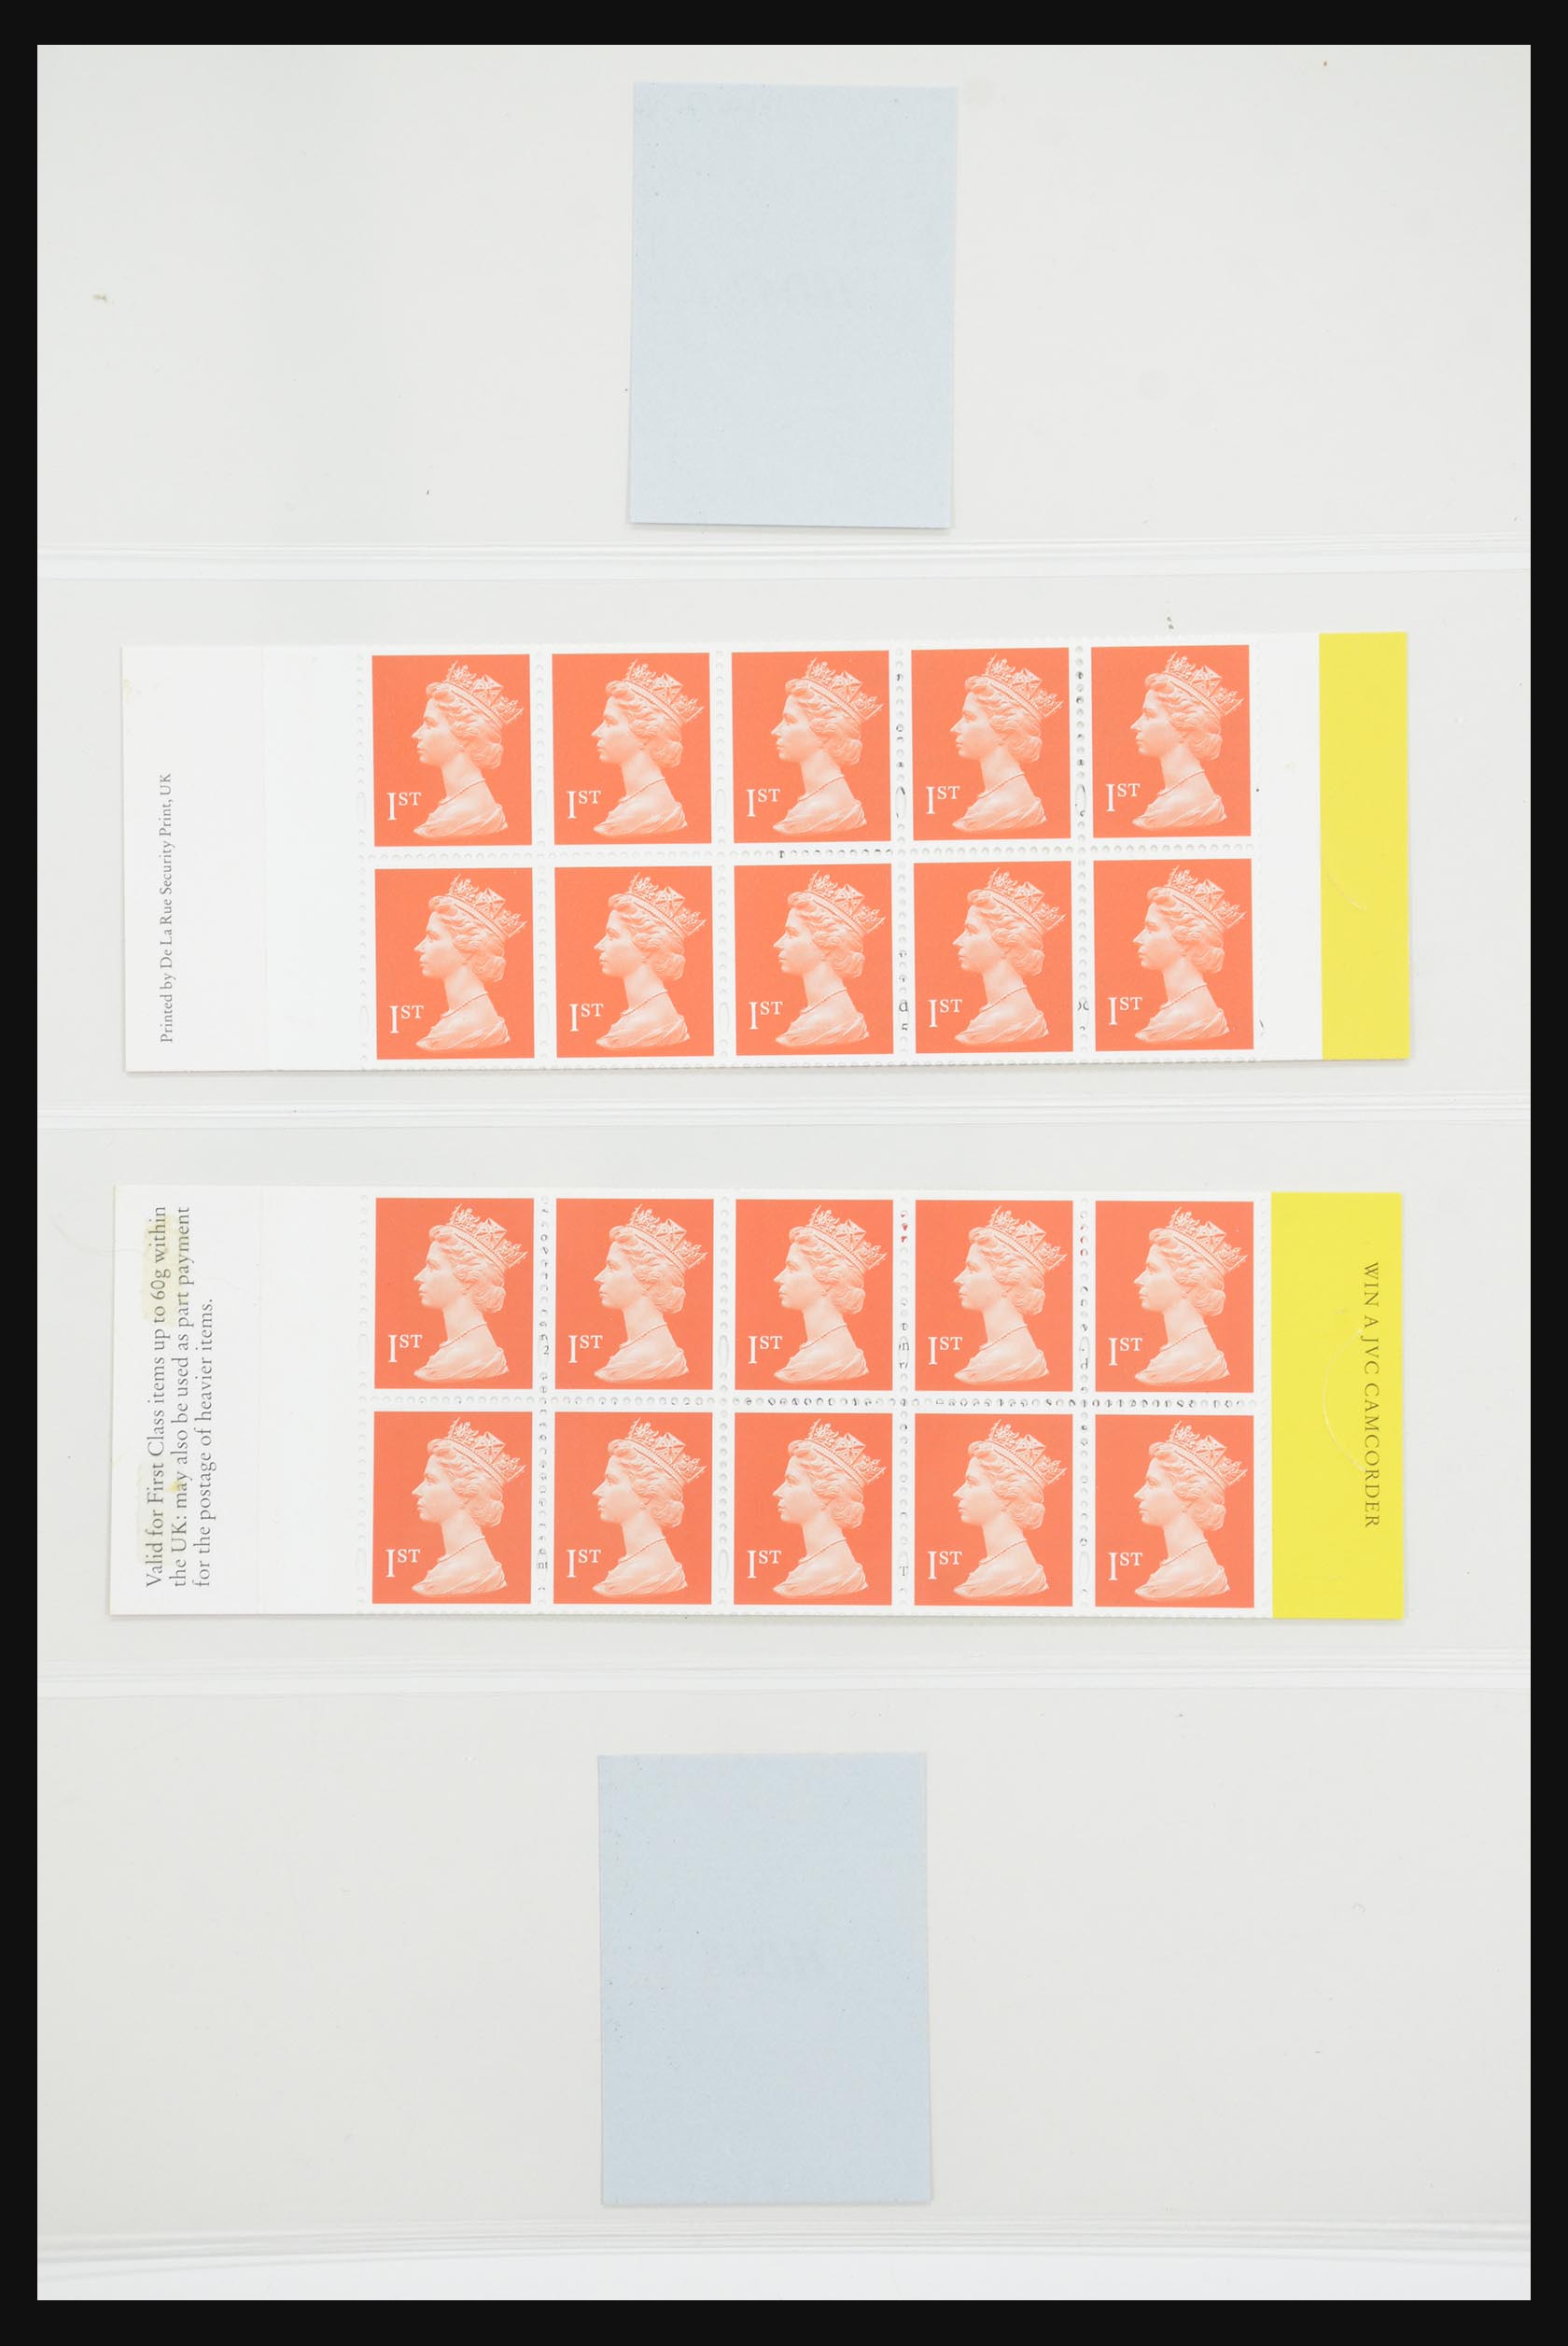 31960 170 - 31960 Great Britain stampbooklets 1989-2000.